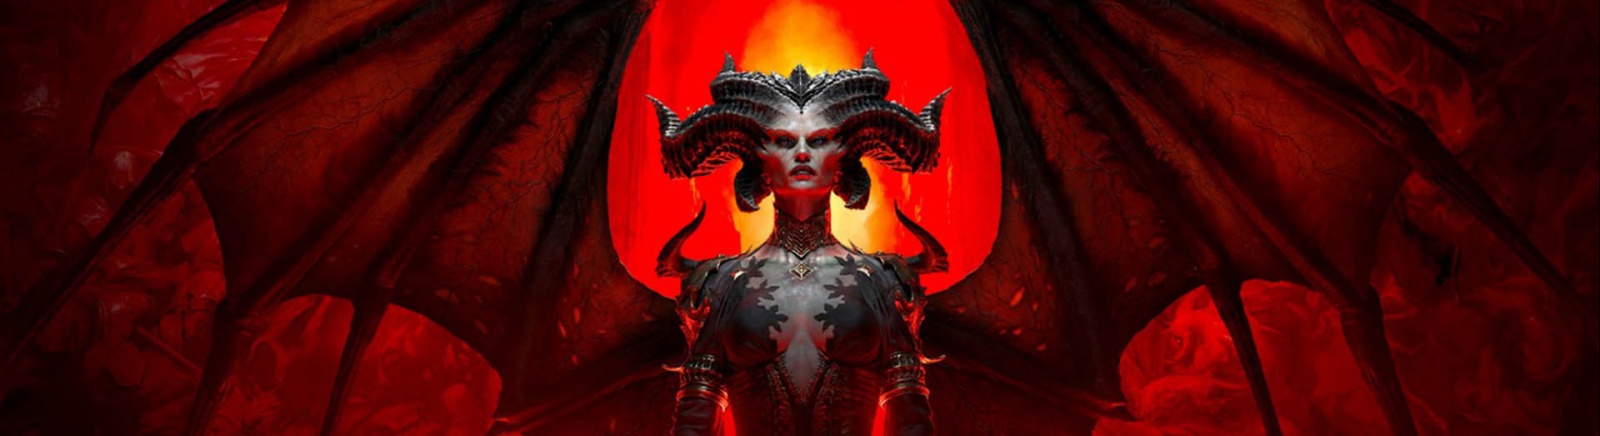 Дата выхода Diablo 4  на PC, PS5 и Xbox Series X/S в России и во всем мире